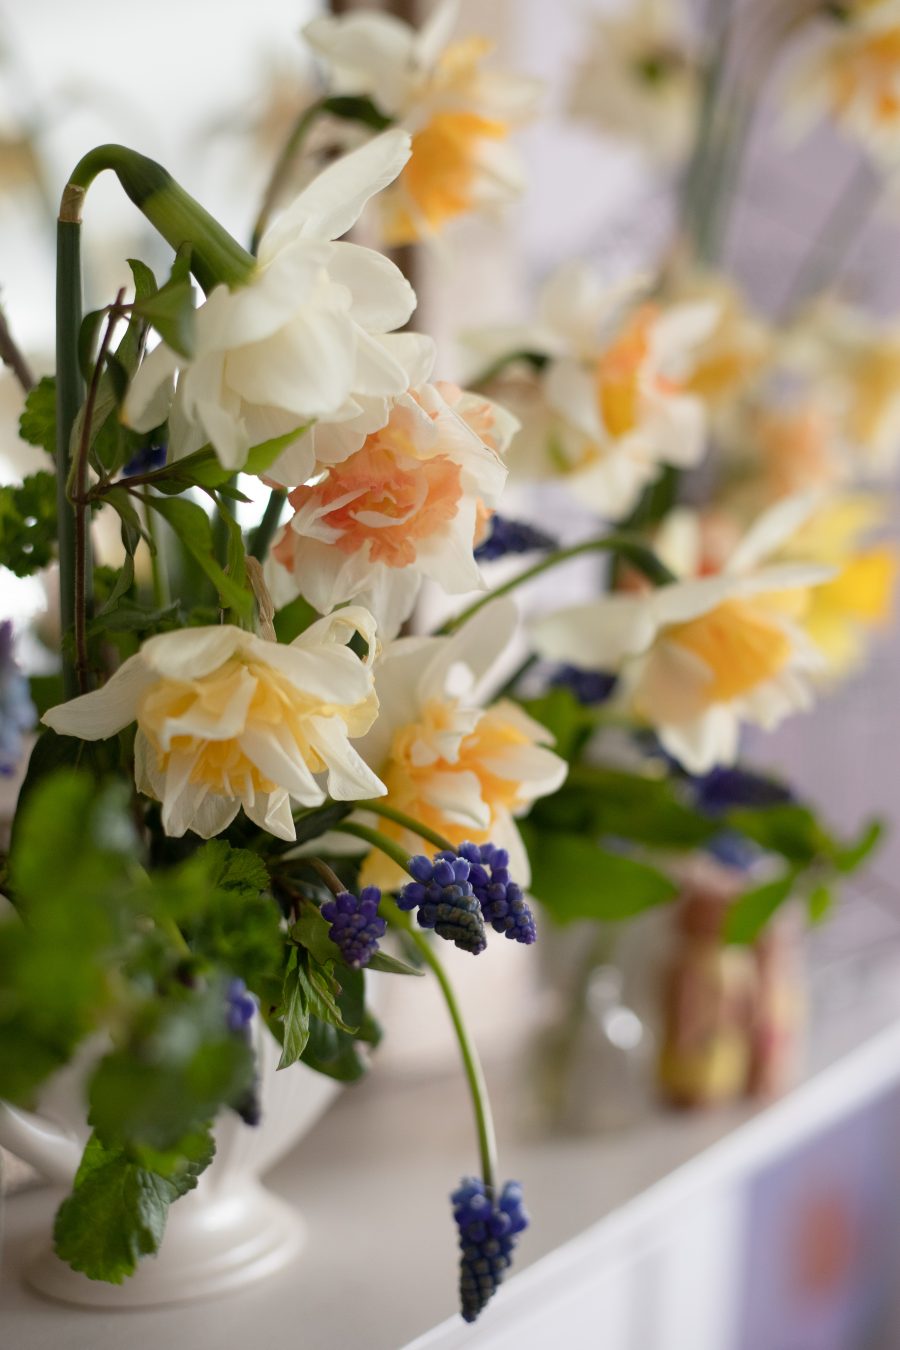 Daffodil decorations